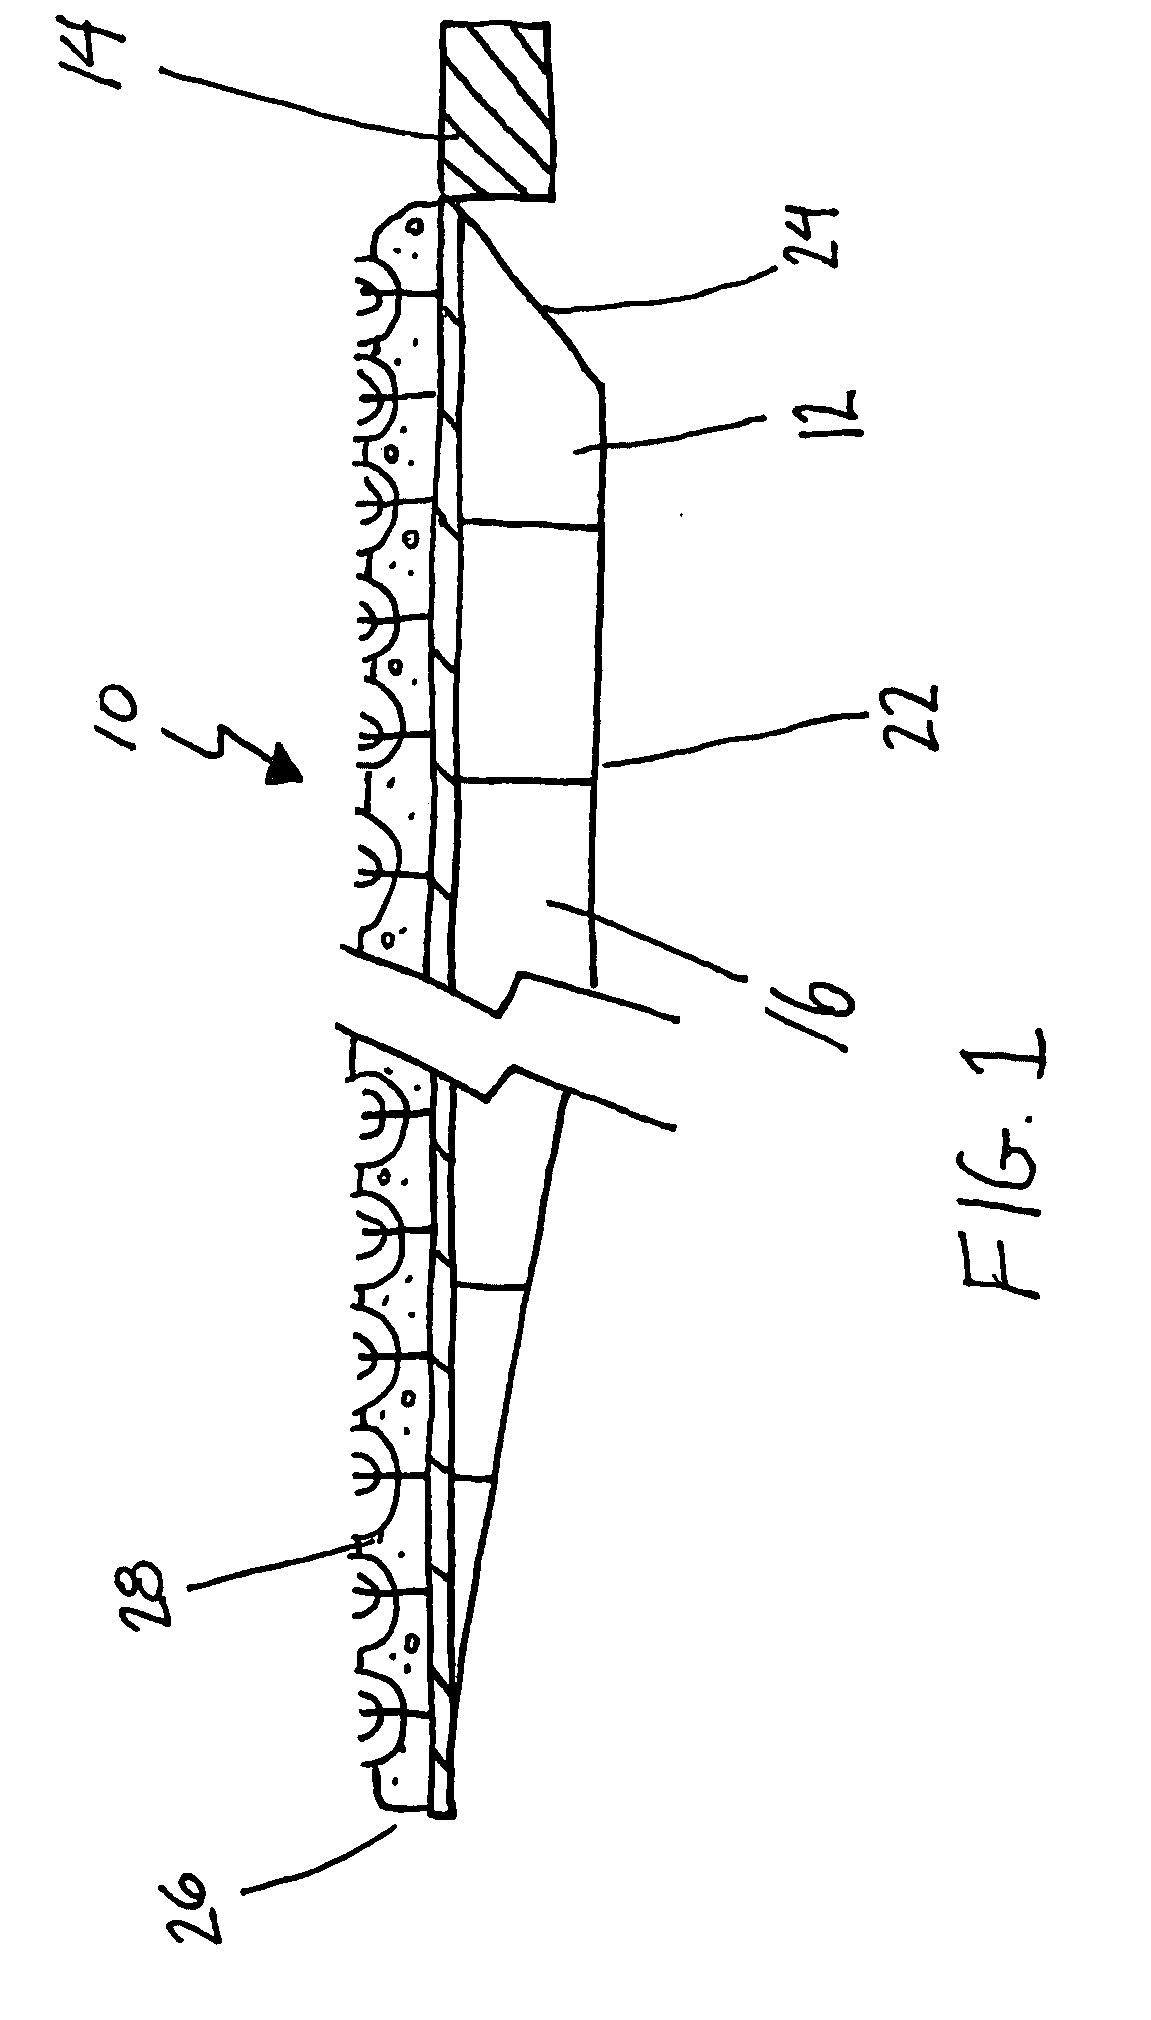 Aircraft arrestor system and method of decelerating an aircraft